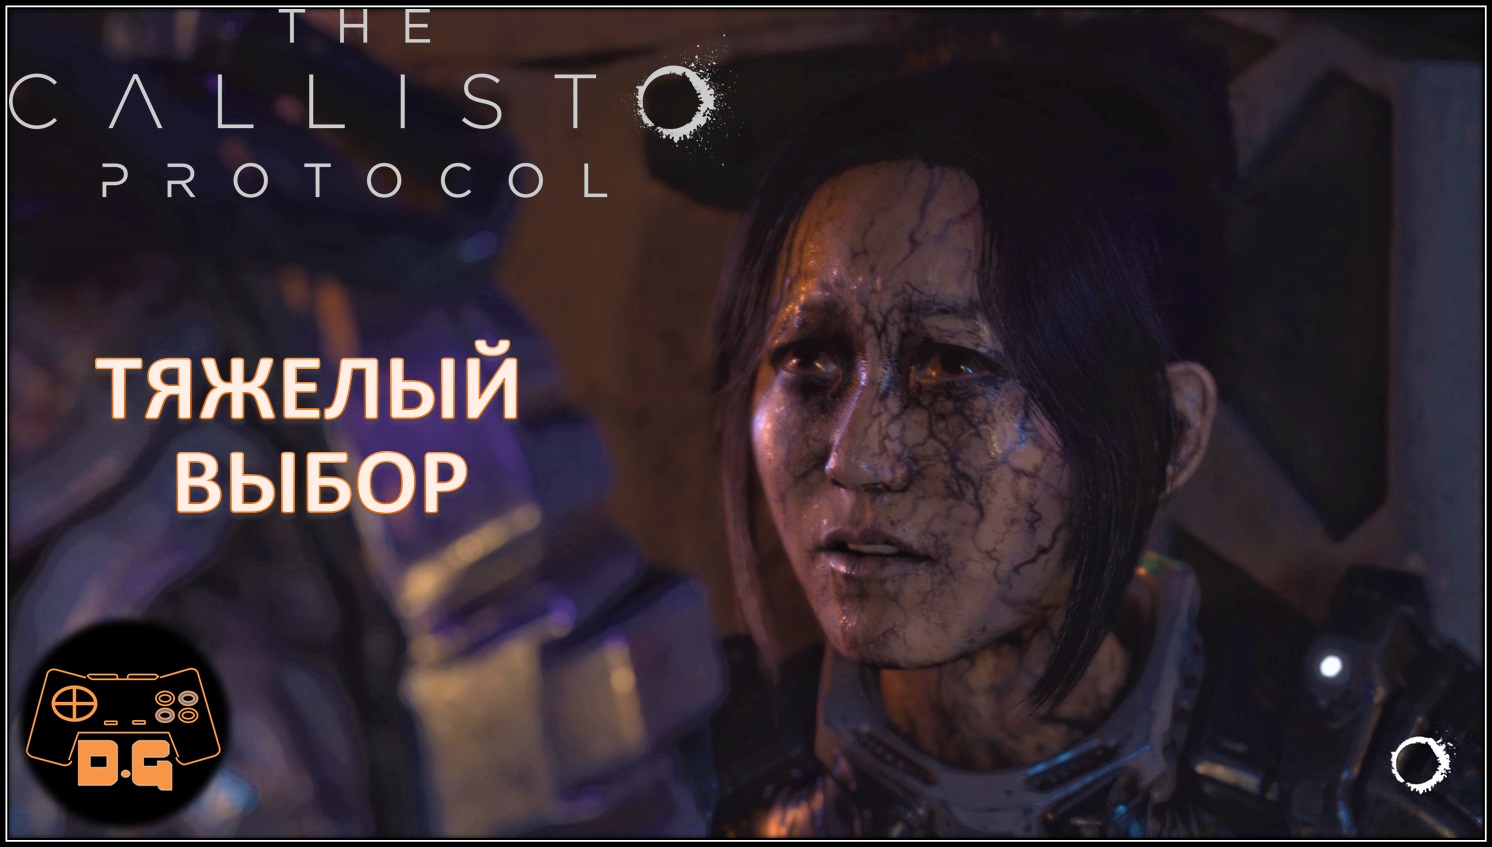 The Callisto Protocol ◈ ОПЯТЬ В ТЮРЬМУ!? ◈ ДРУГ-ЗОМБИ ◈ #10